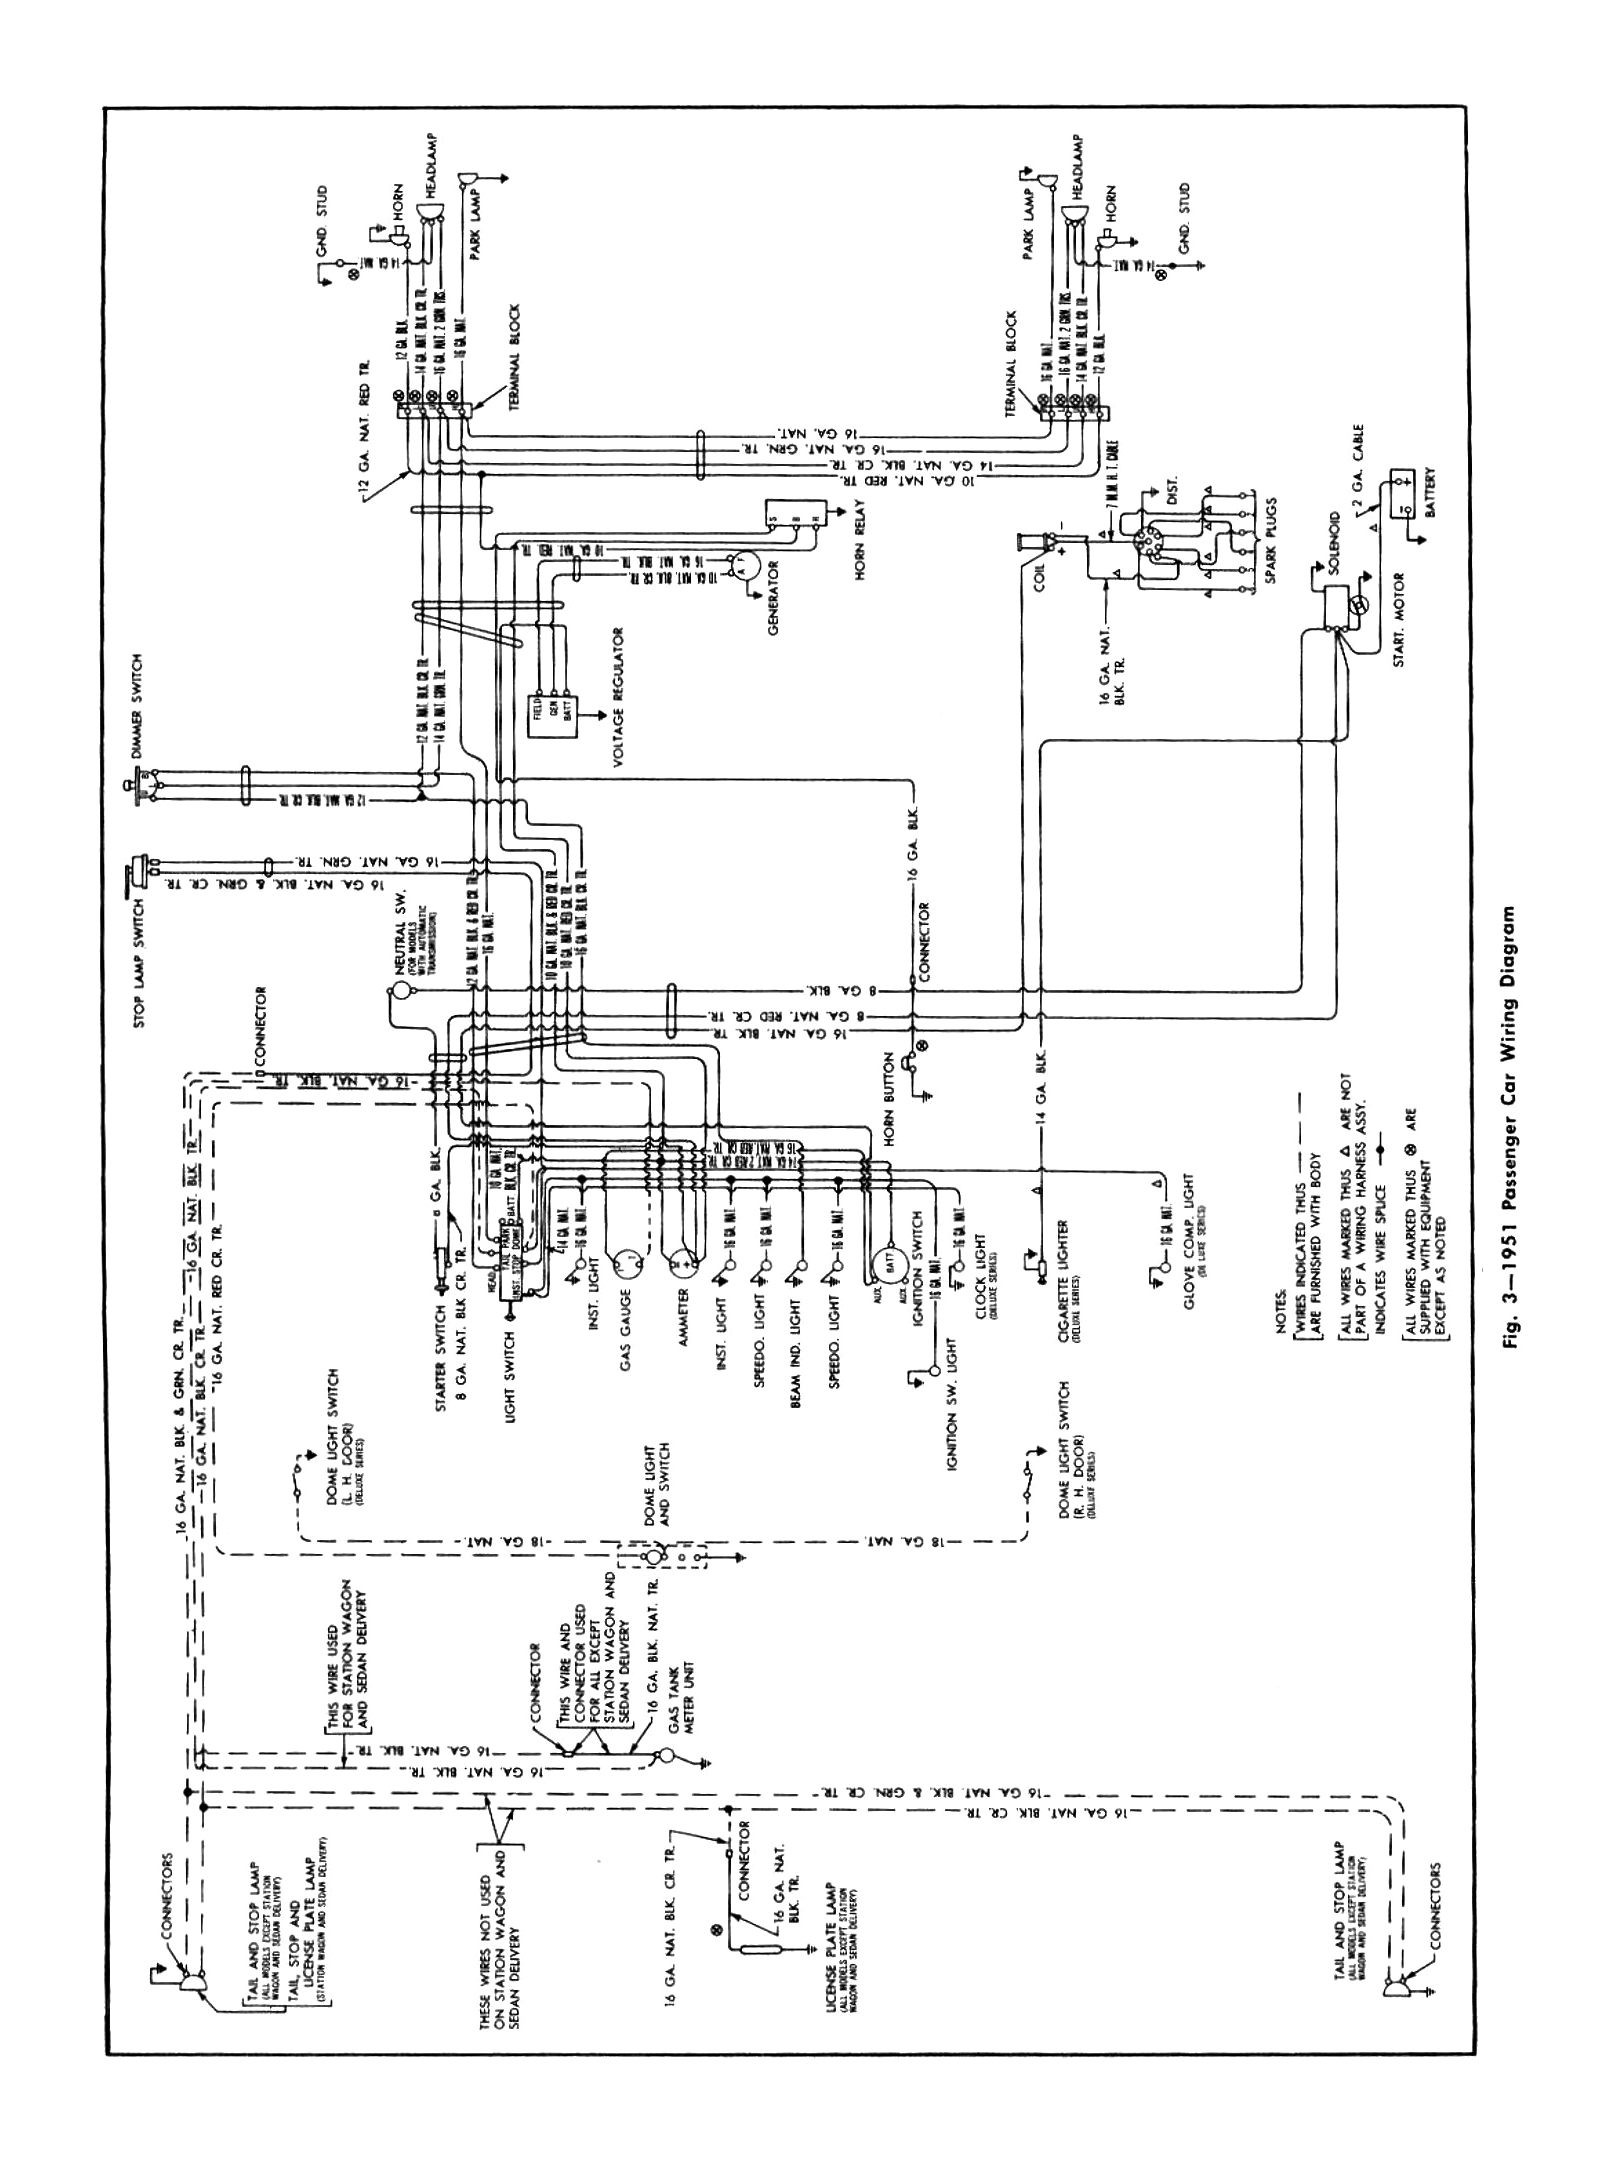 Wiring Diagram for A 1988 Club Car Chevy Wiring Diagrams Of Wiring Diagram for A 1988 Club Car